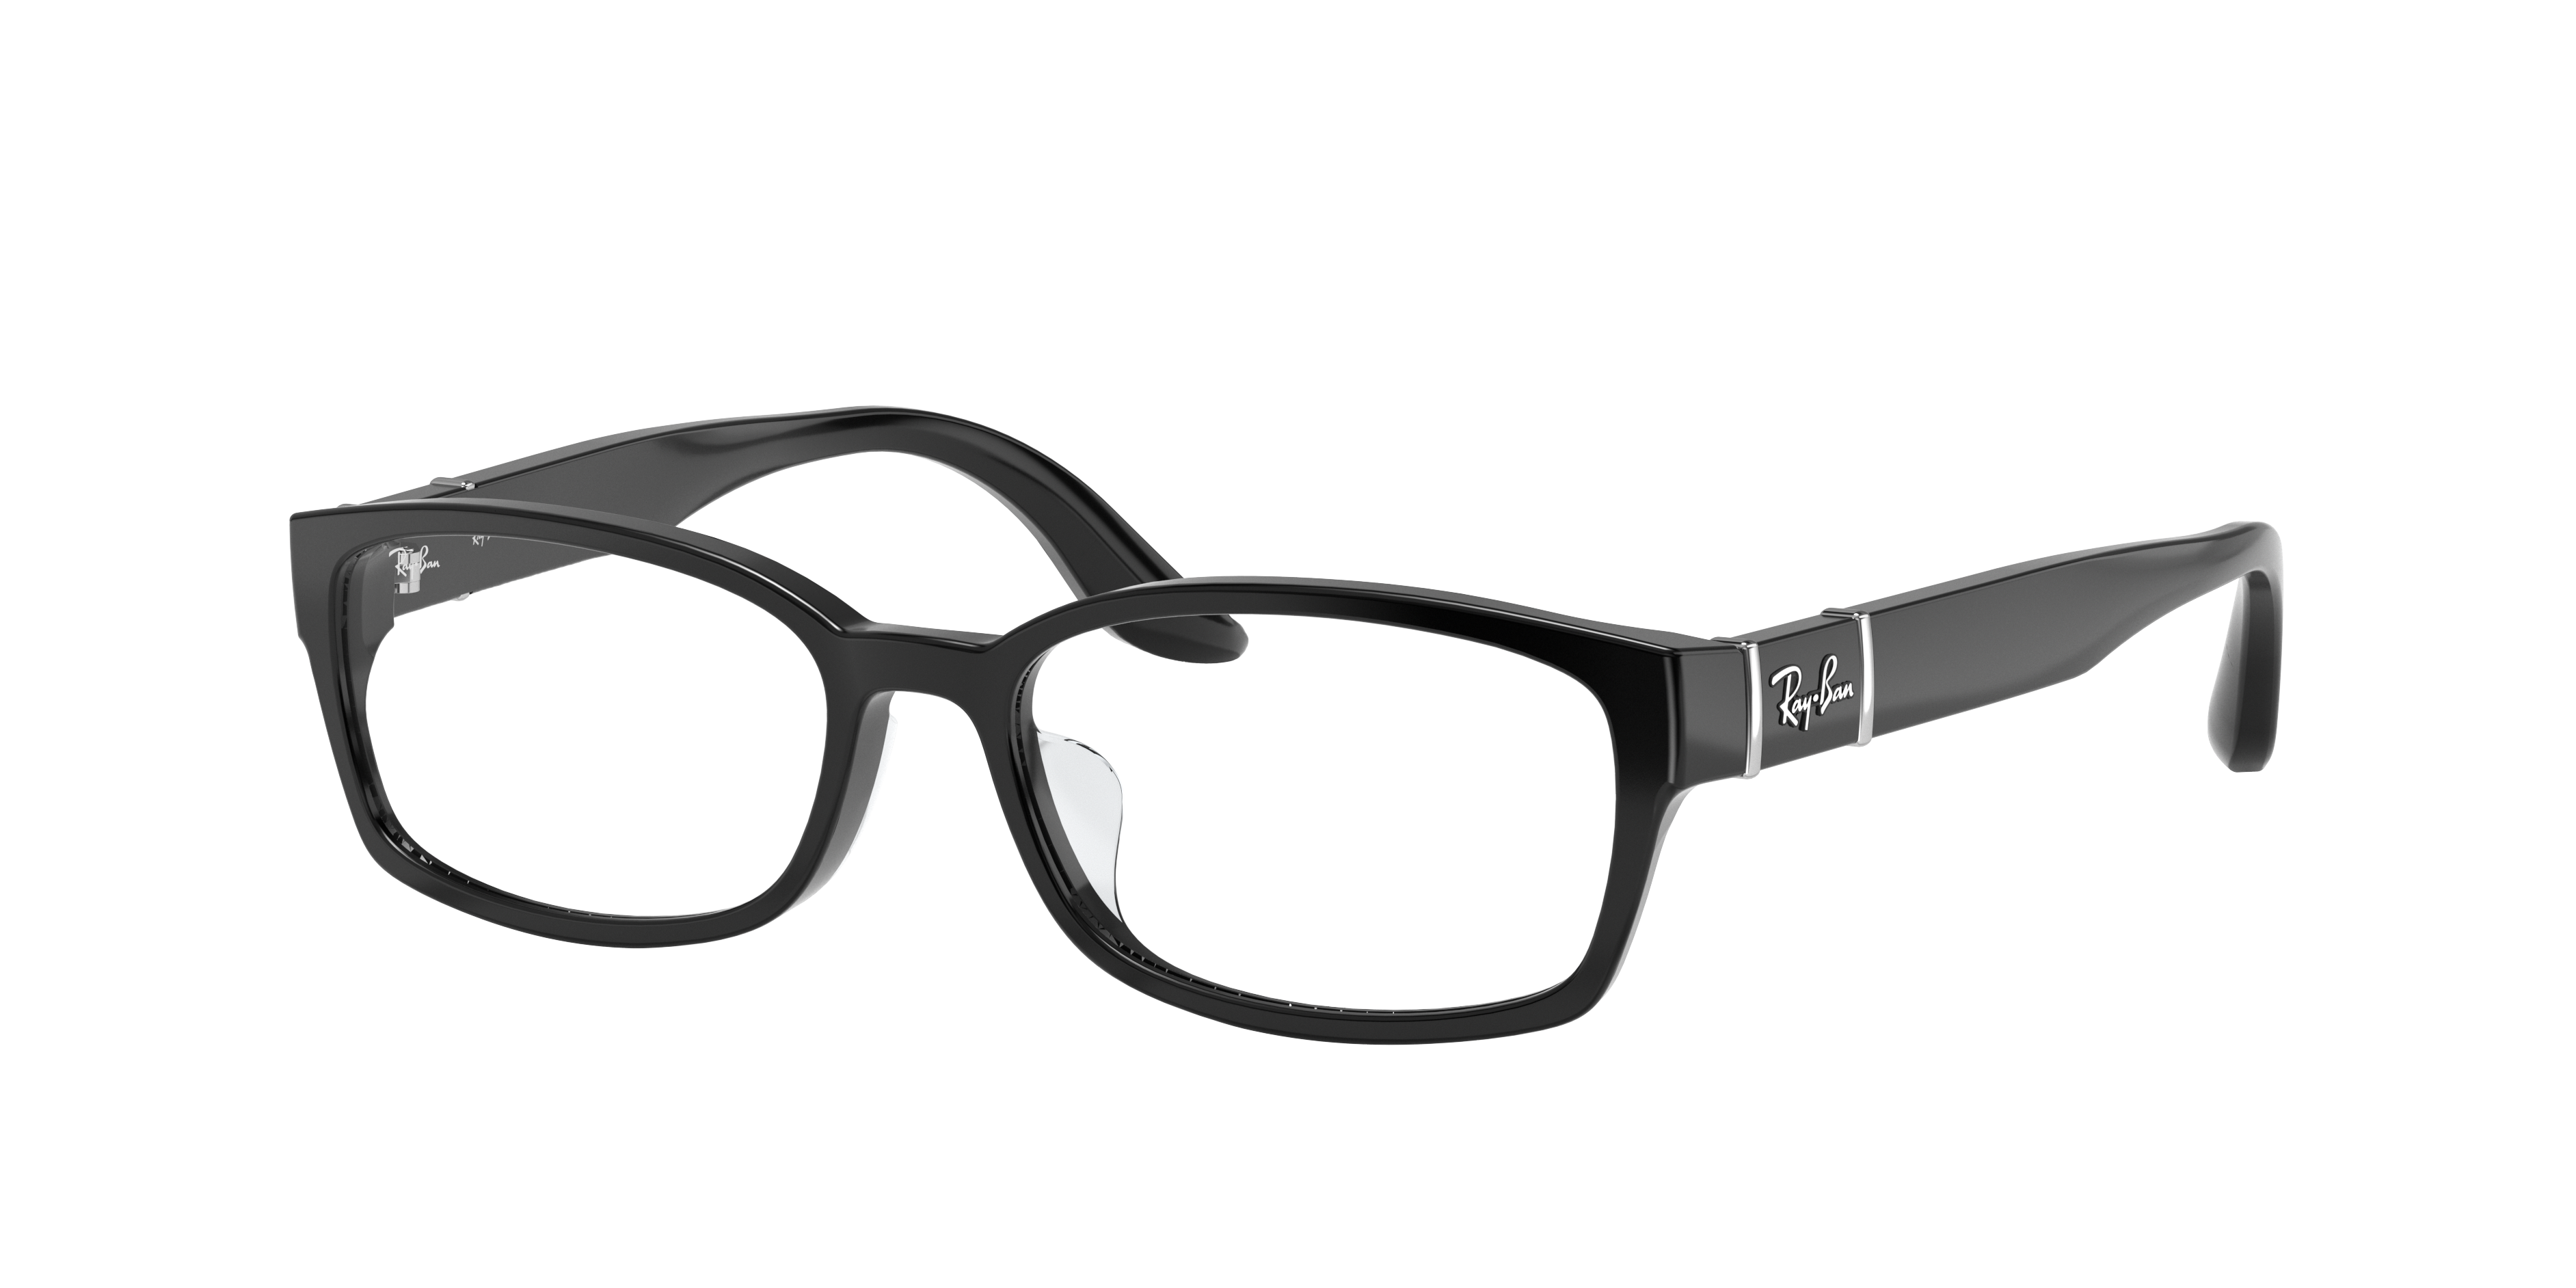 Ray Ban Rb5198 Eyeglasses Black Frame Clear Lenses 53-16